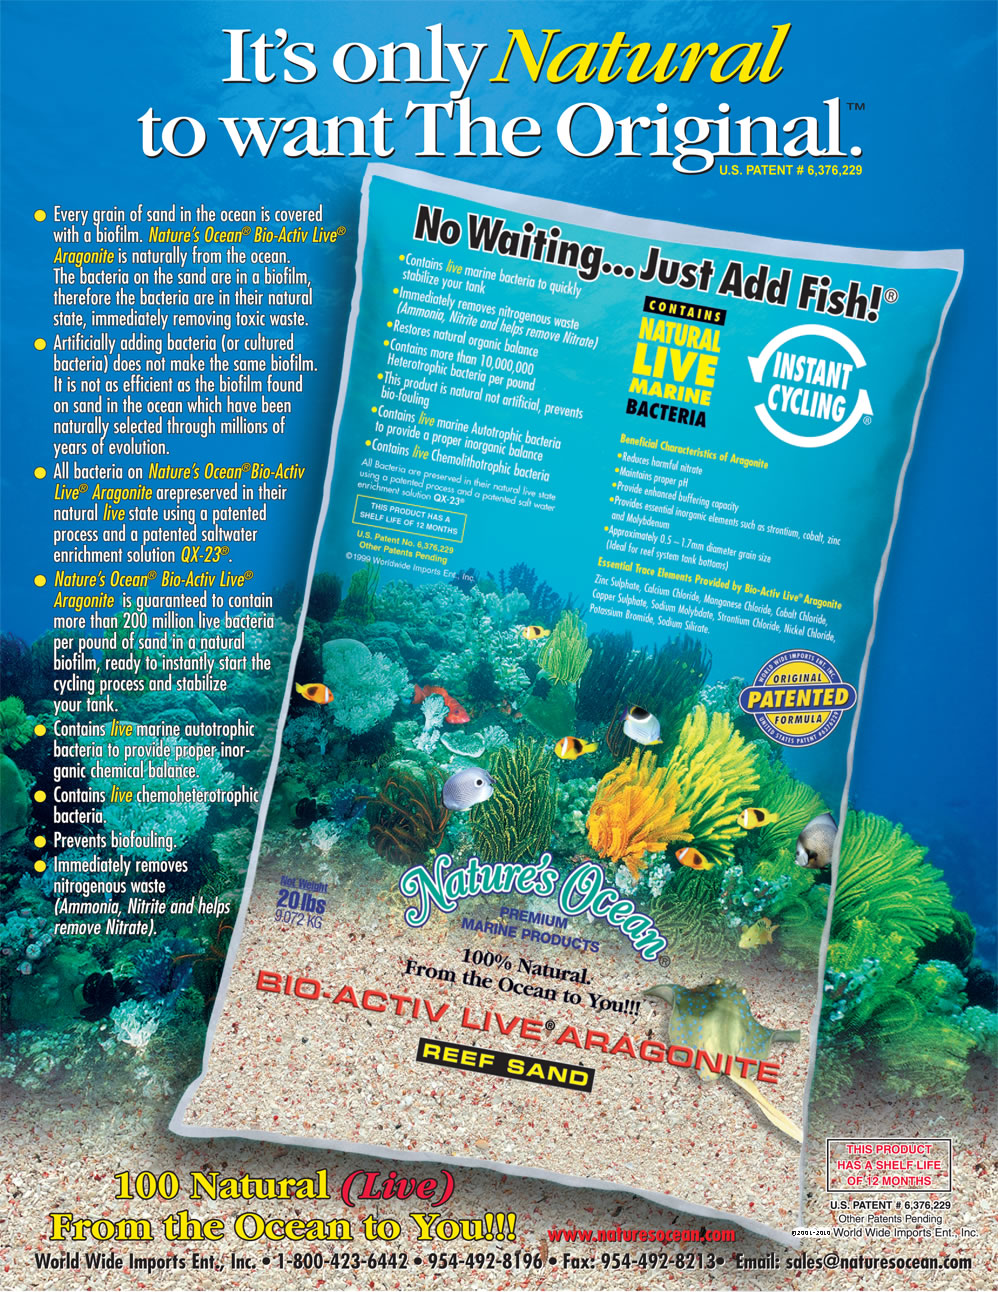 Natures Ocean® Bio Activ Live Aragonite Reef Sand Brochure